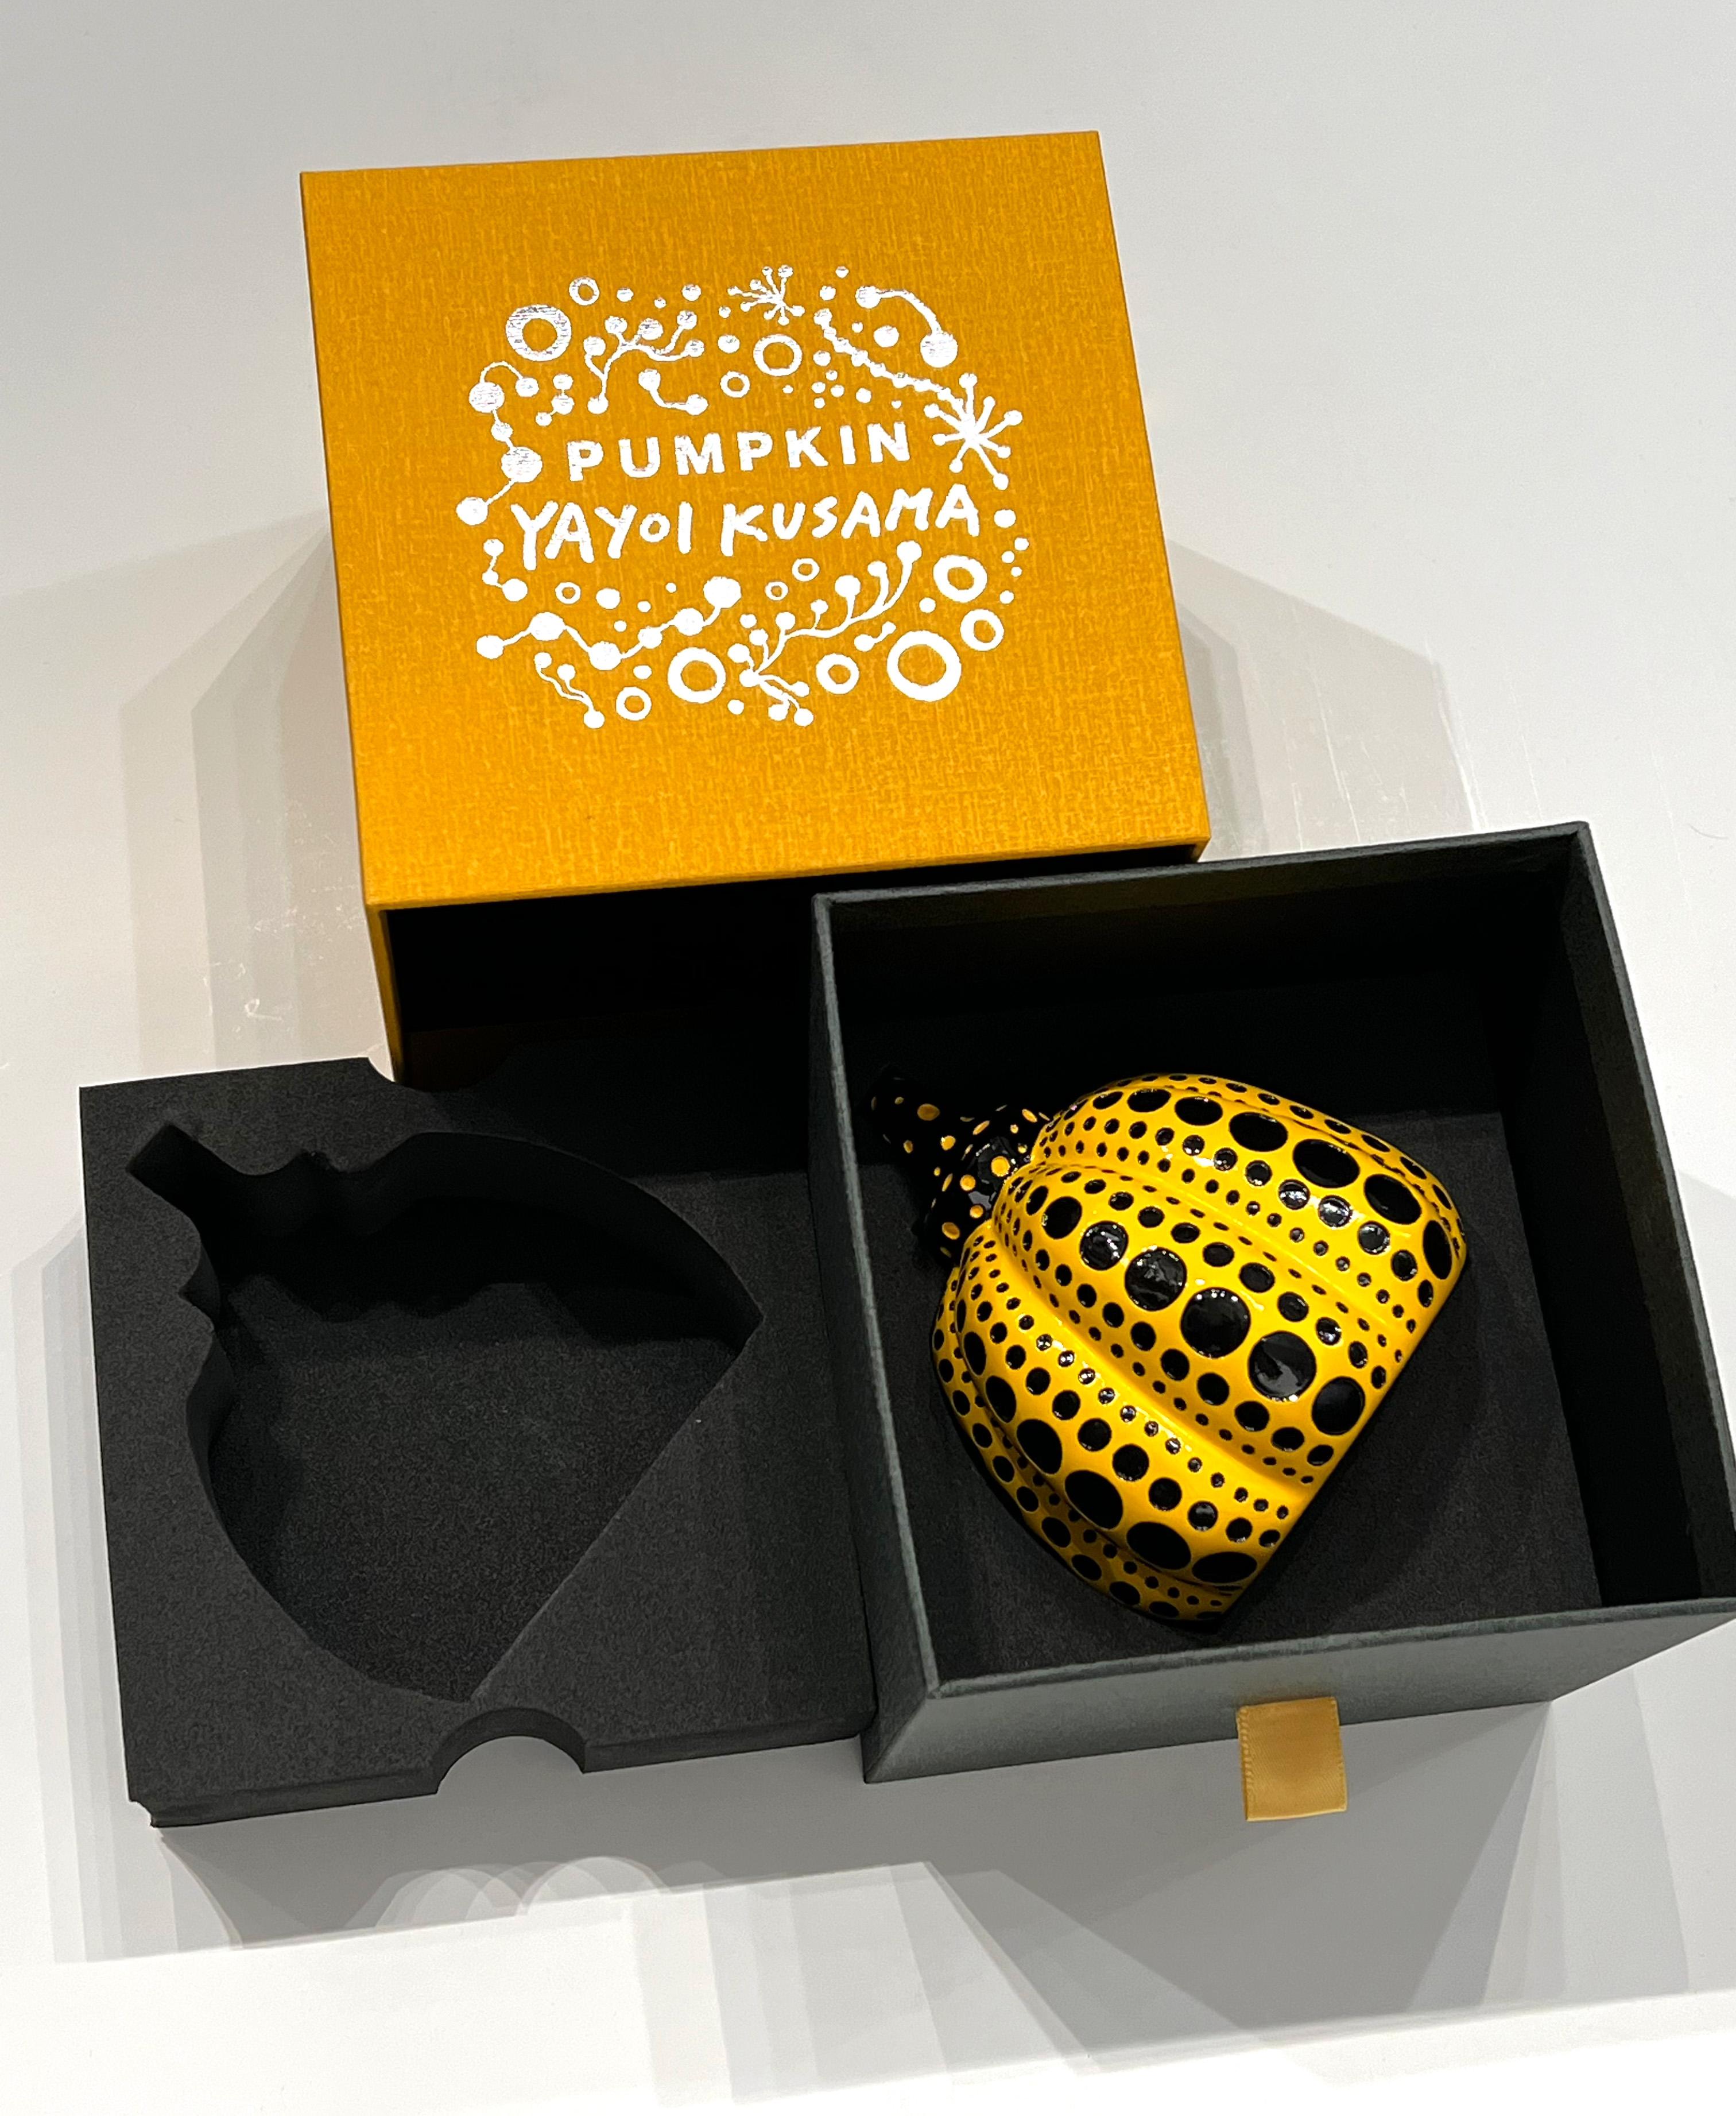 Yayoi Kusama 'Pumpkin' Yellow/Black Pumpkin Pop Art Resin Sculpture, 2016 For Sale 4